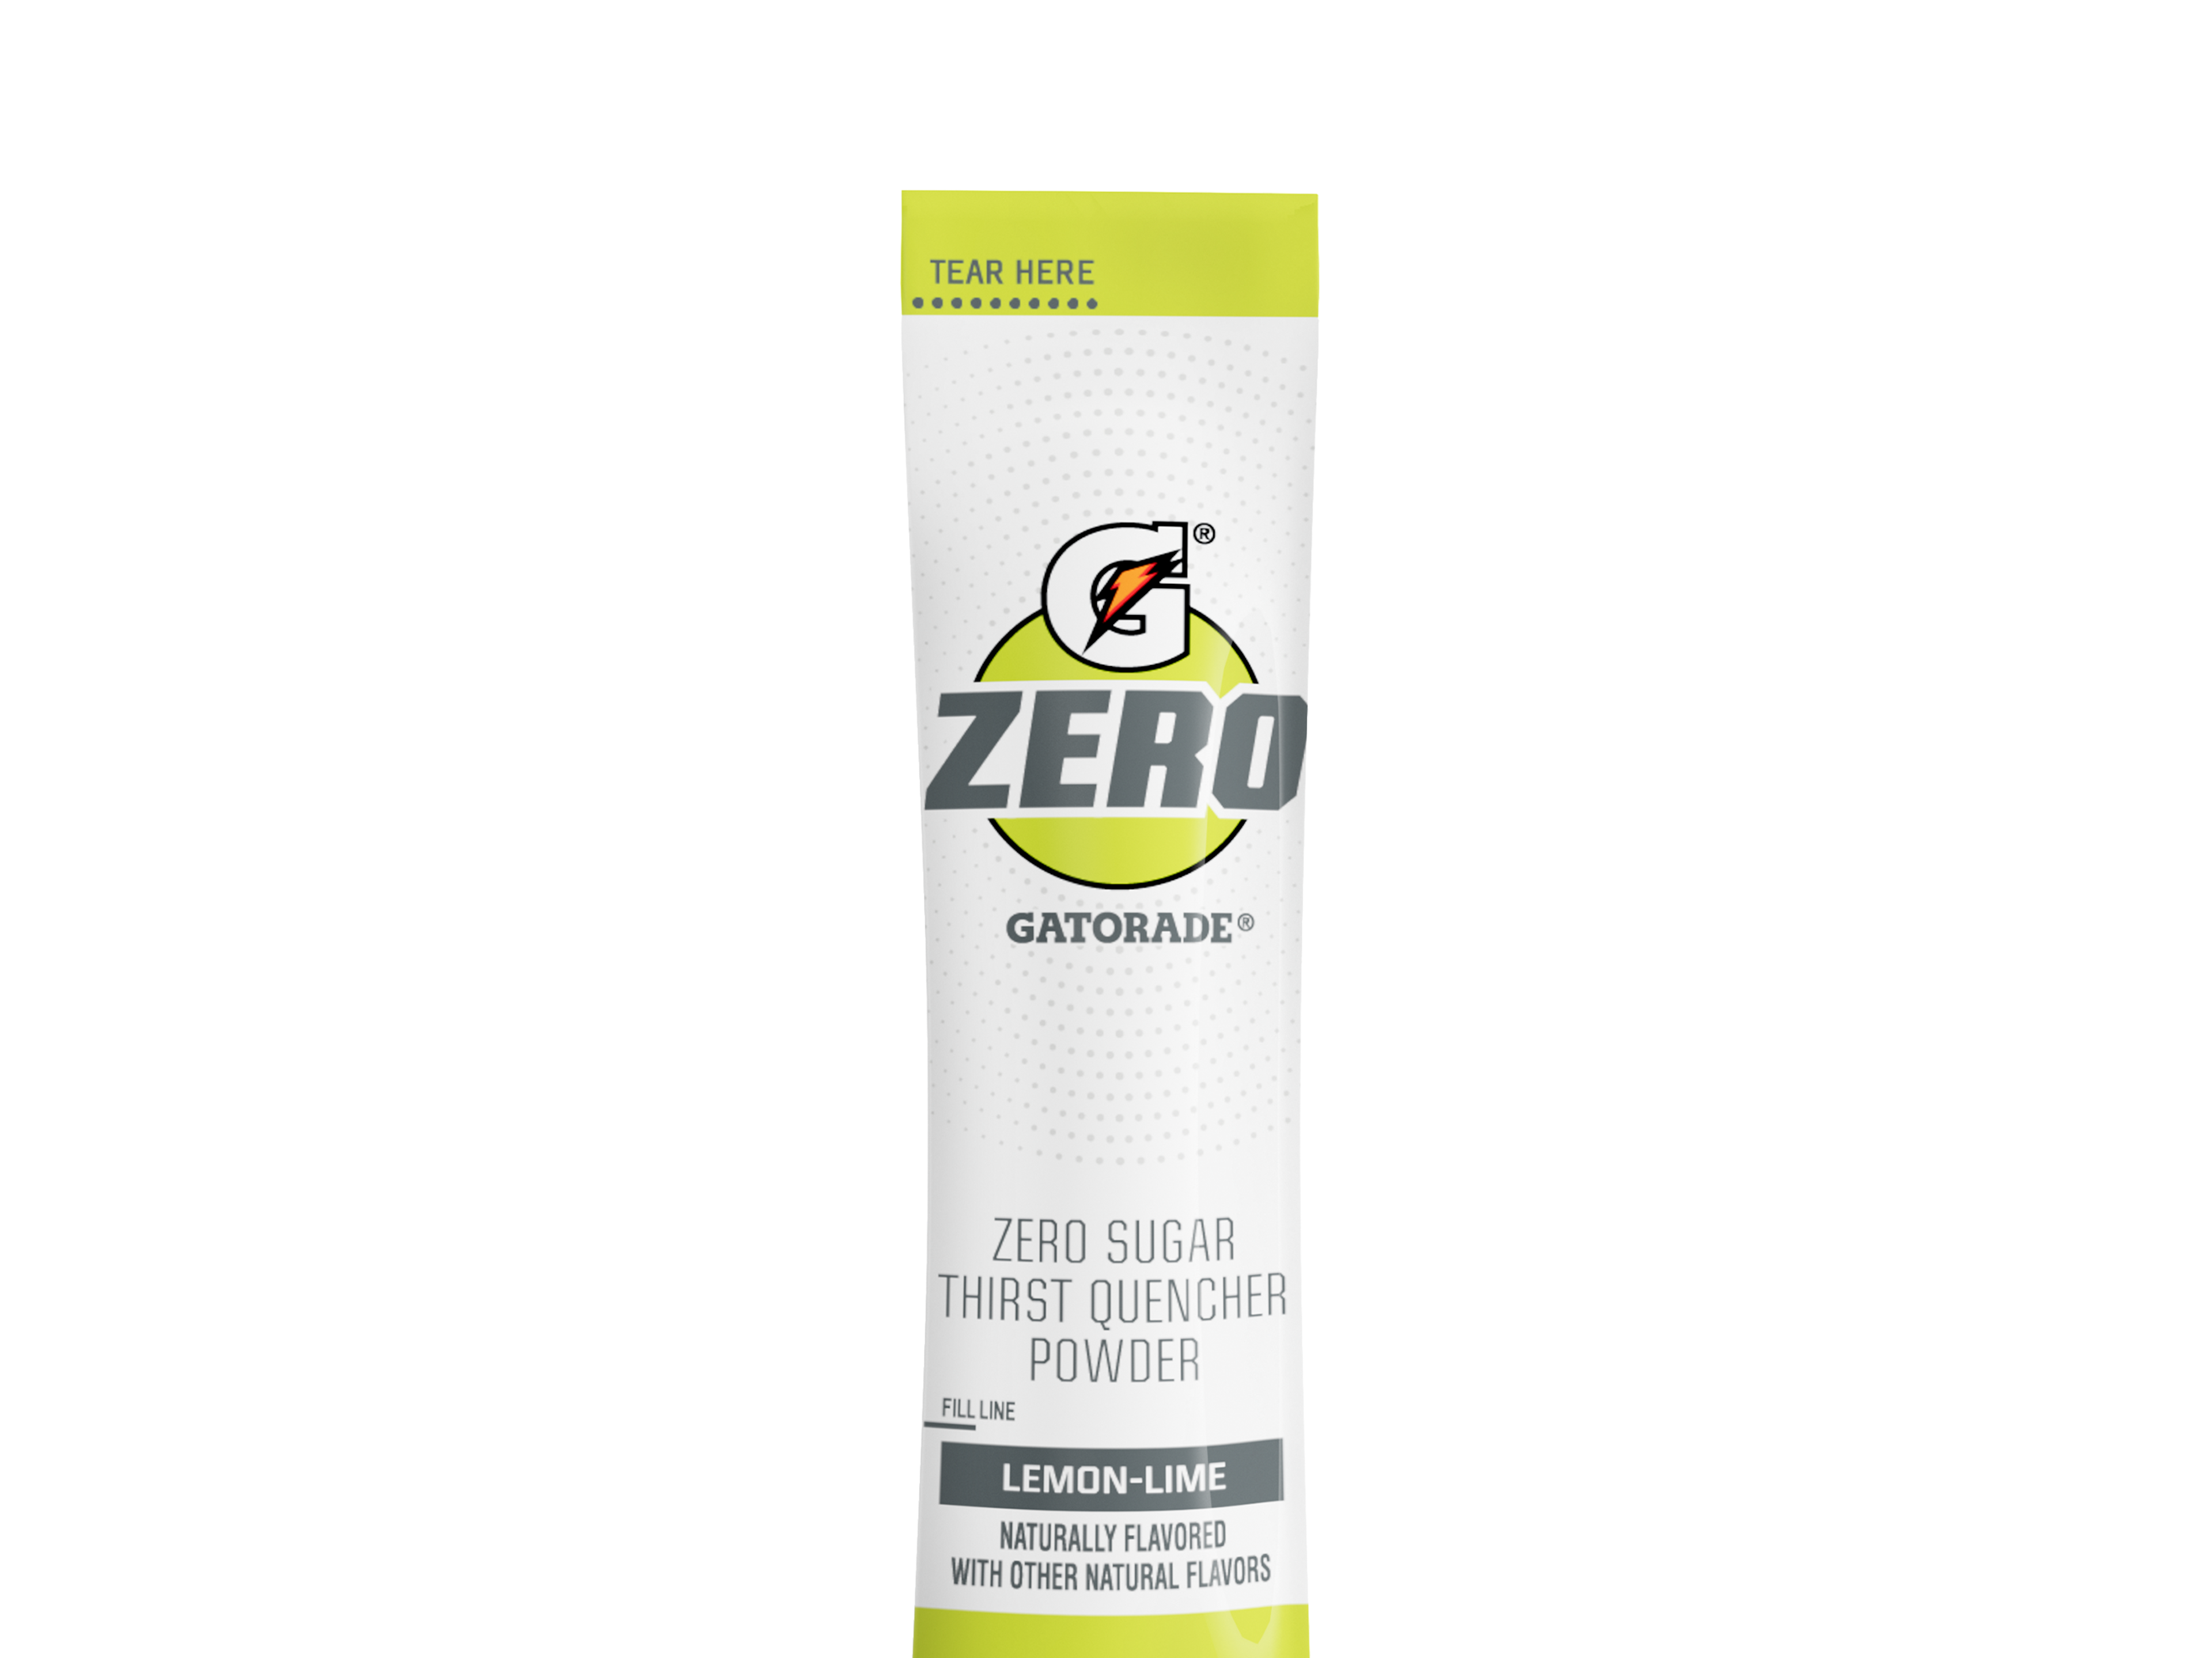 Gatorade zero lemon lime single serve powder